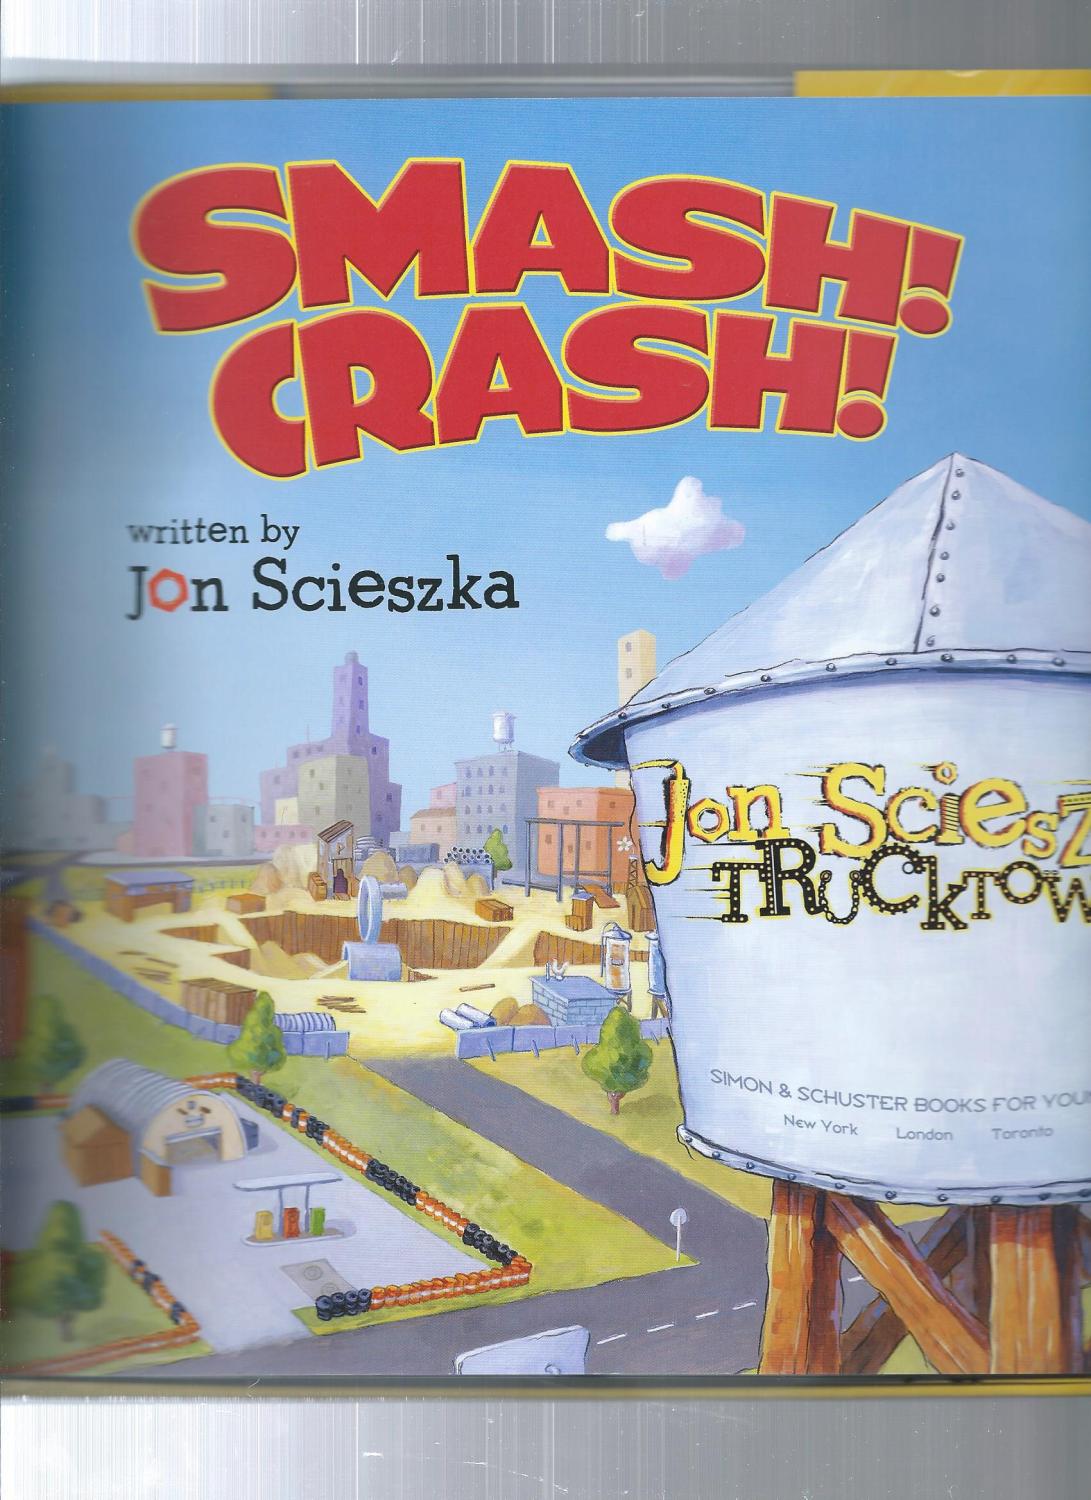 Lot of Jon Scieszka’s Trucktown MELVIN MIGHT? Smash! Crash! Hardcover Books